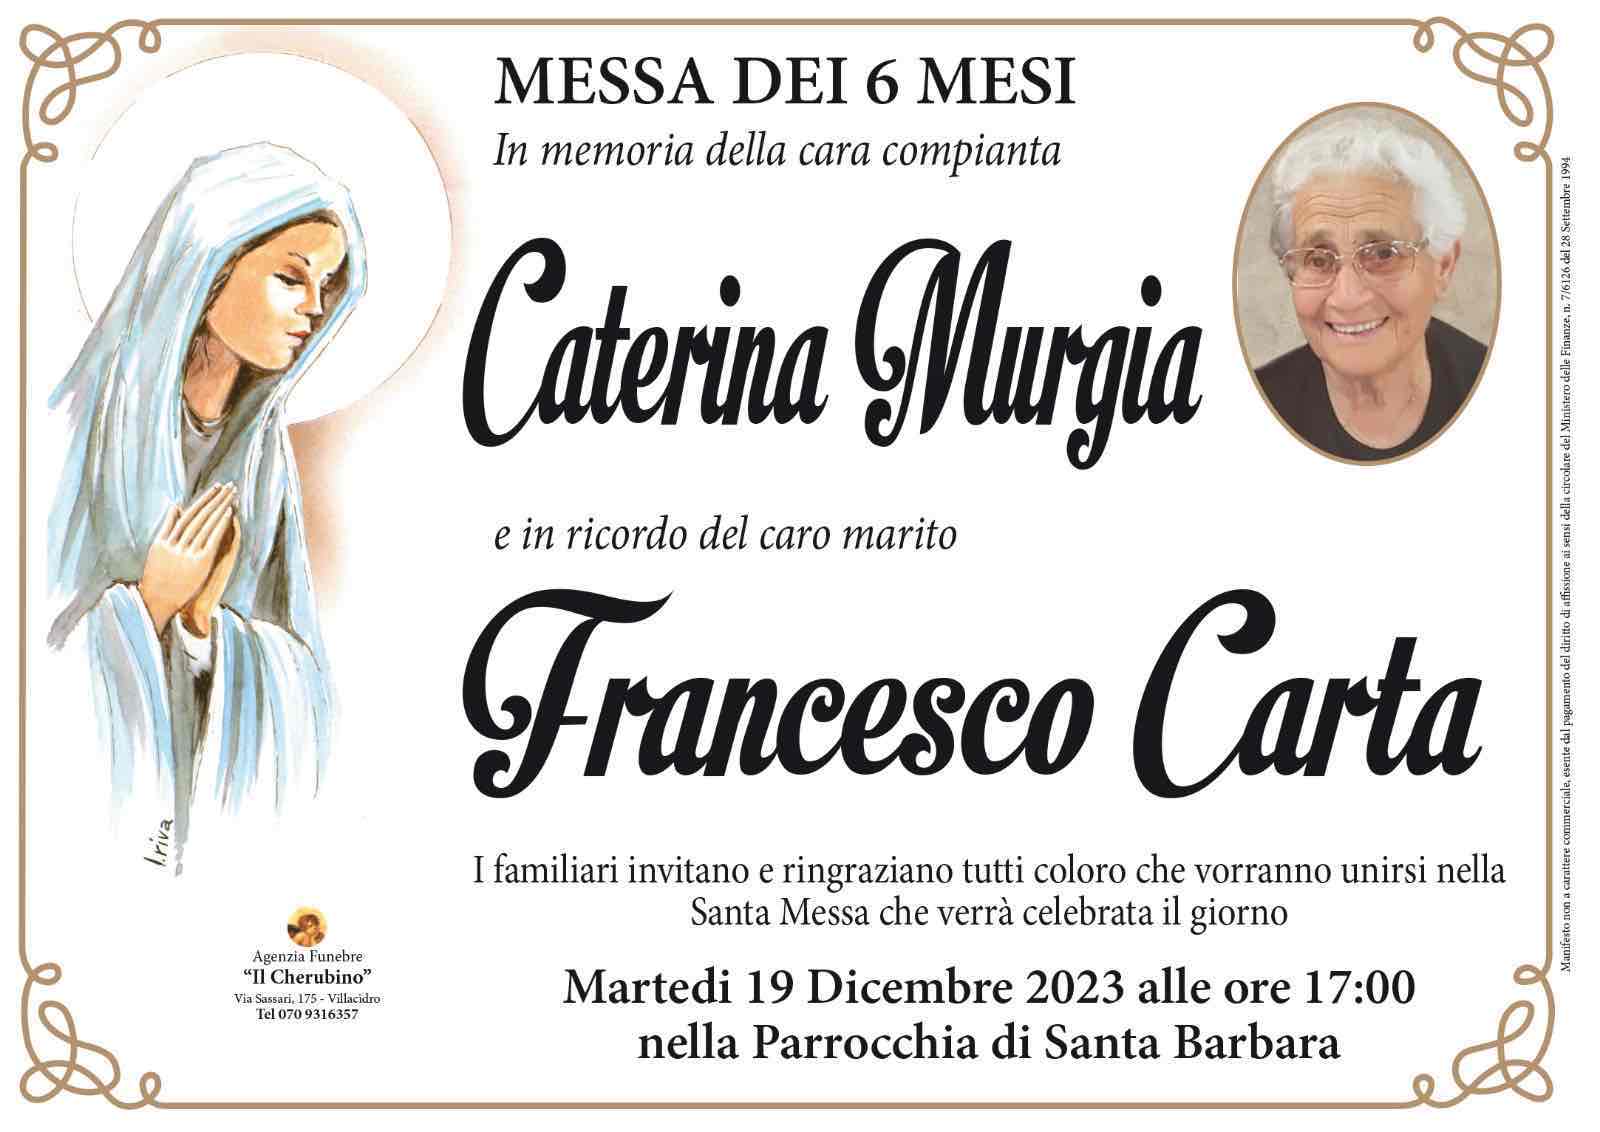 Caterina Murgia e Francesco Carta